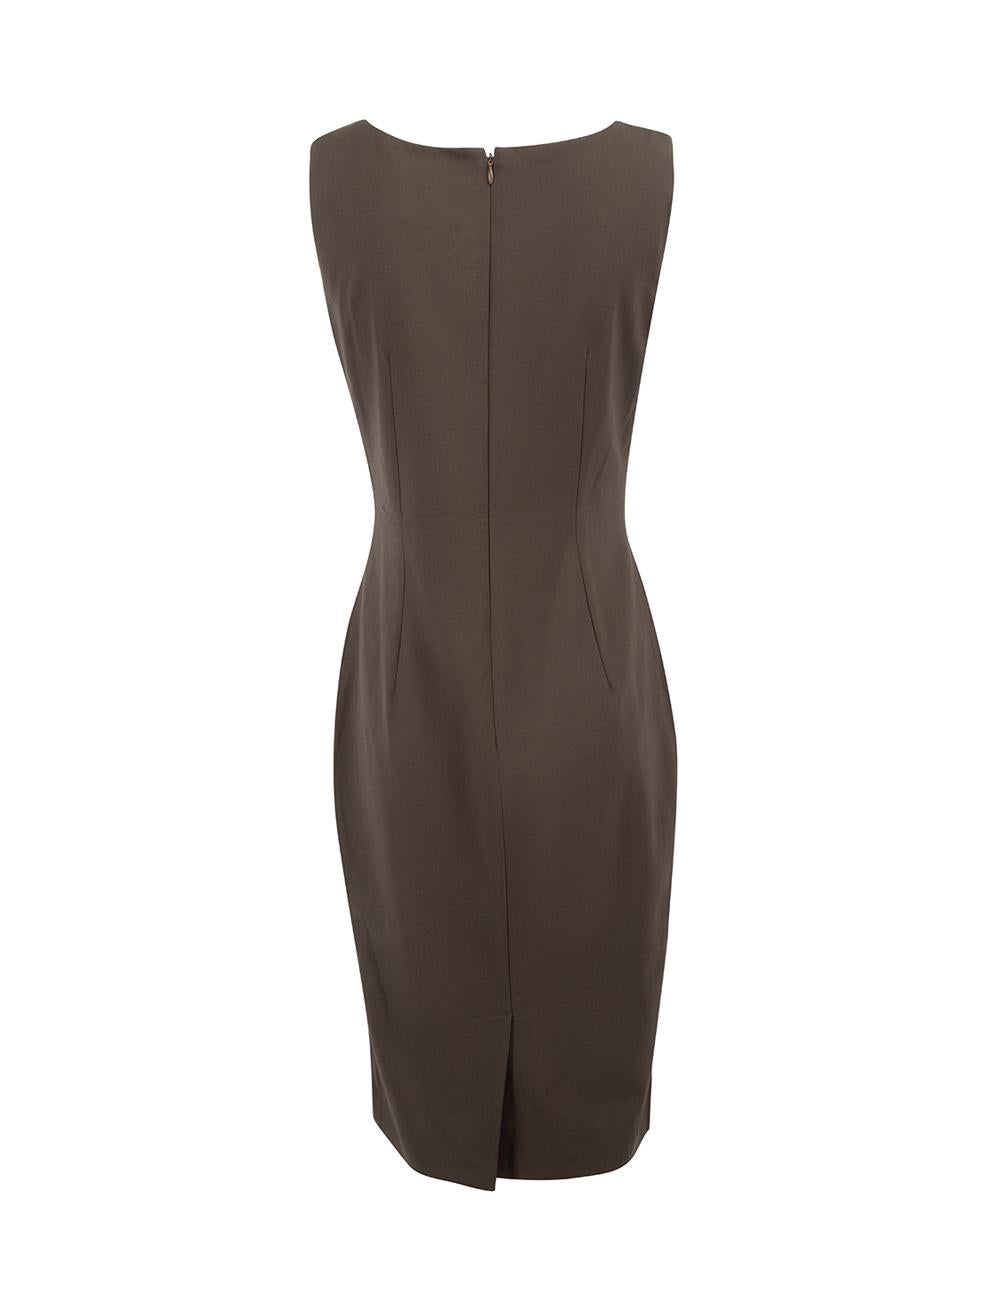 Dolce & Gabbana Brown Virgin Wool Midi-Length Dress Size M In Good Condition In London, GB